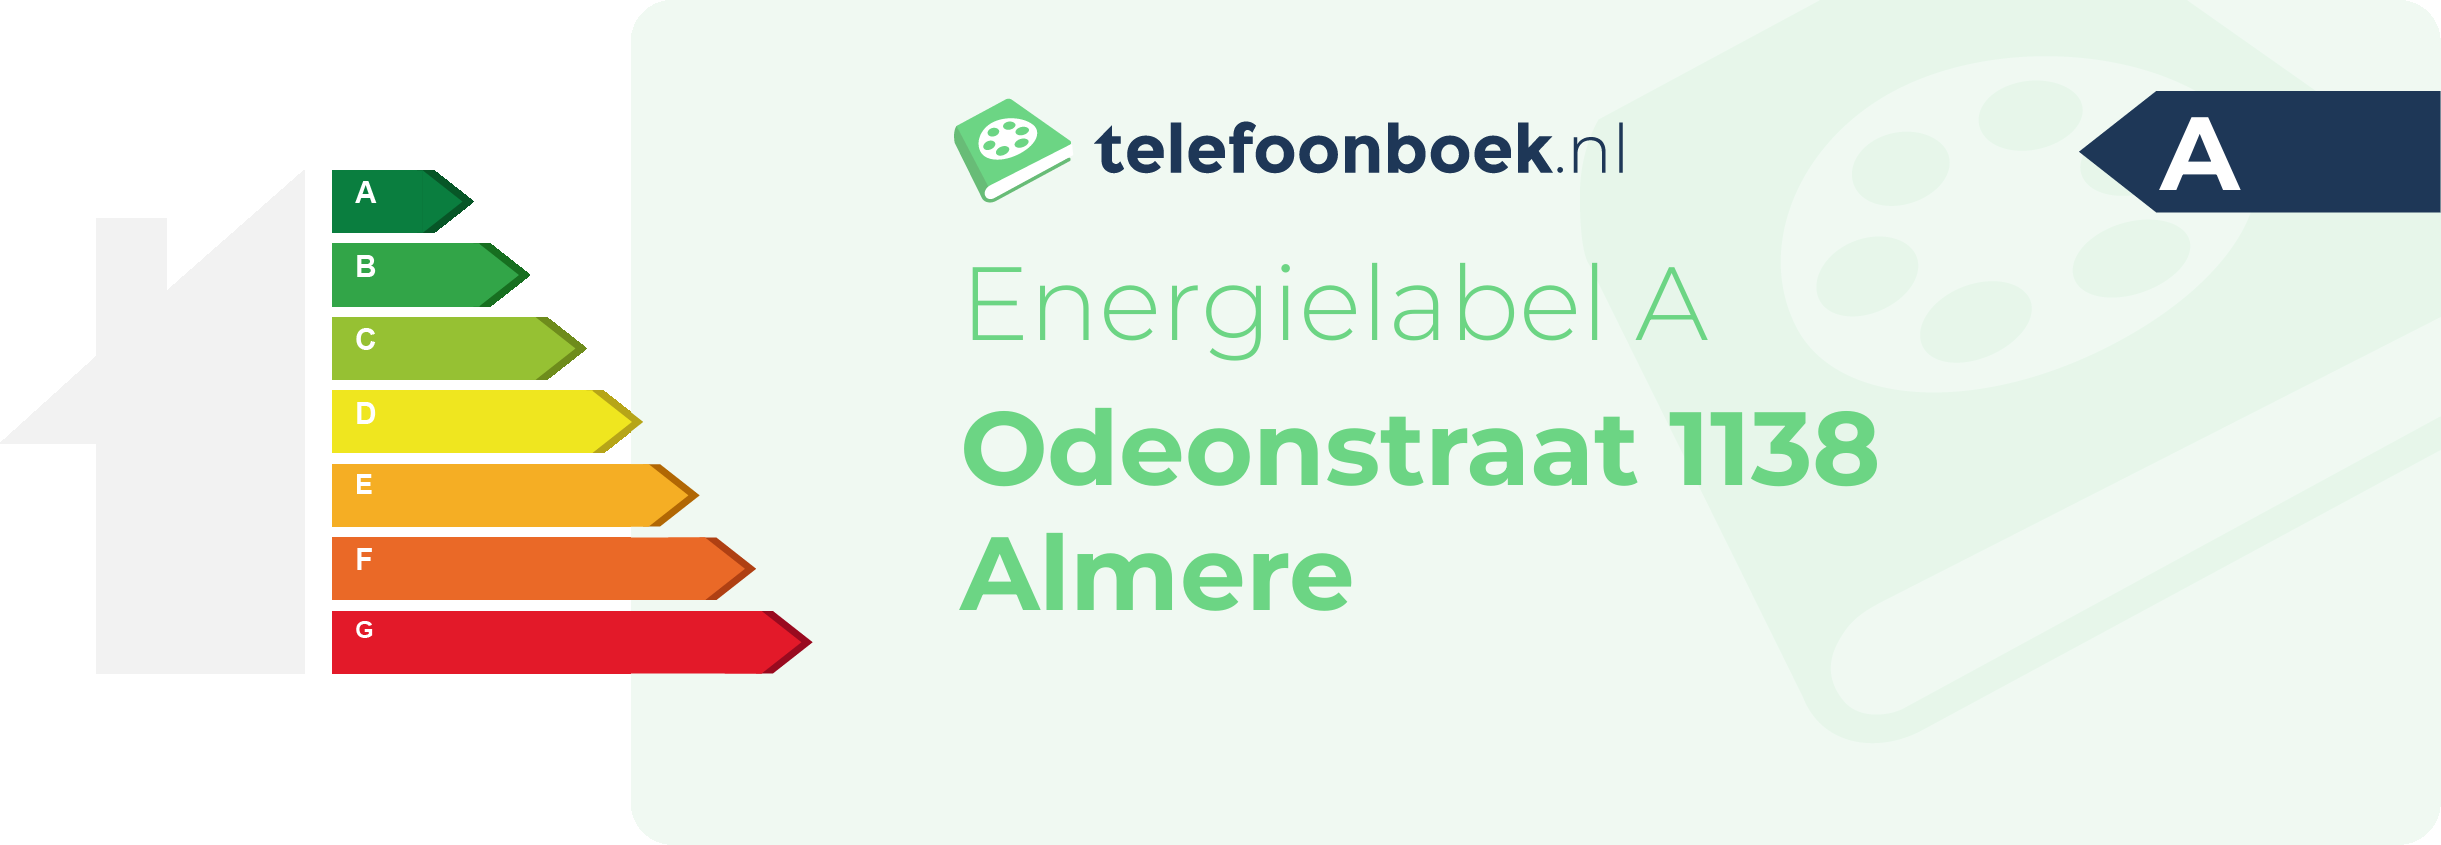 Energielabel Odeonstraat 1138 Almere